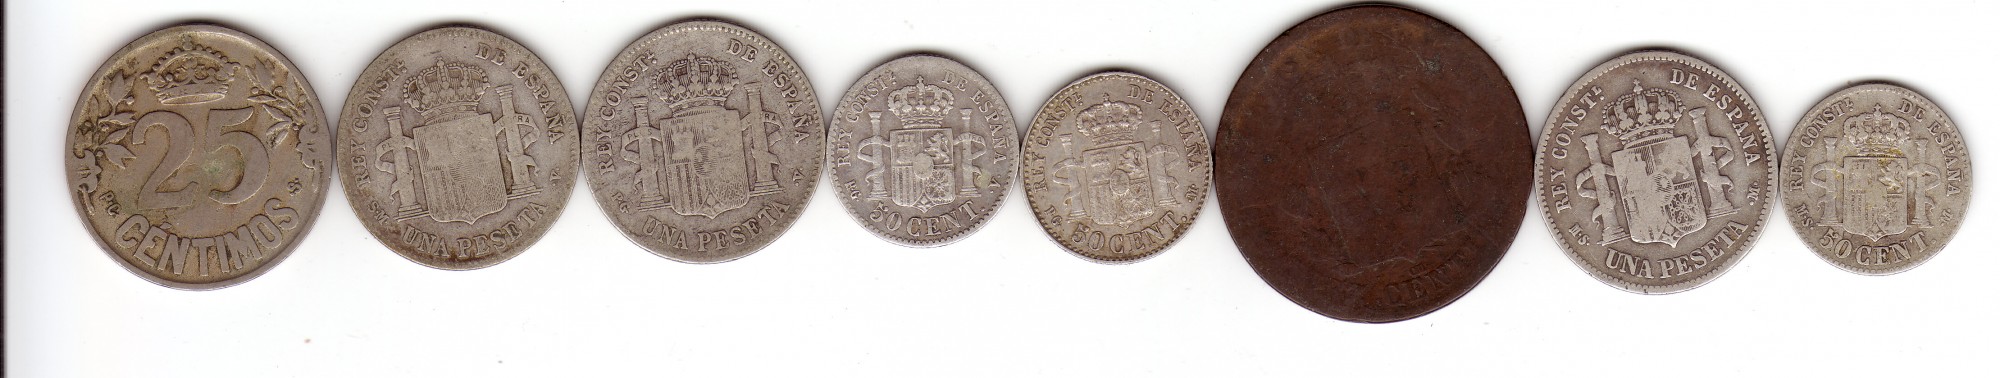 Spanish monarchic coins-reverse